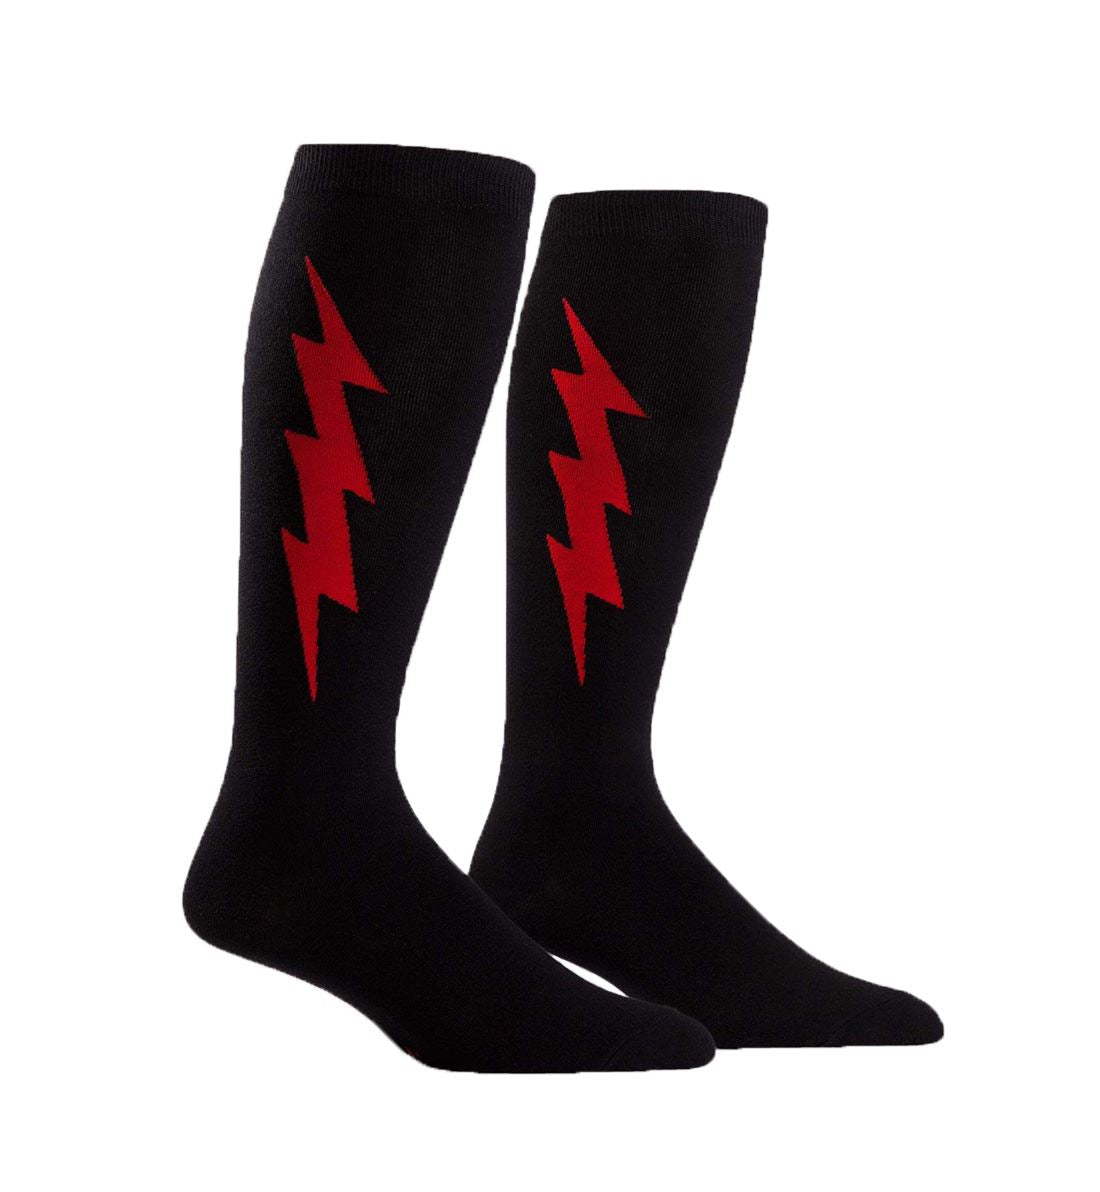 SOCK it to me Unisex Stretch-It Knee High Socks (s0020),Super Hero (Red &amp; Black) - Super Hero (Red &amp; Black),One Size